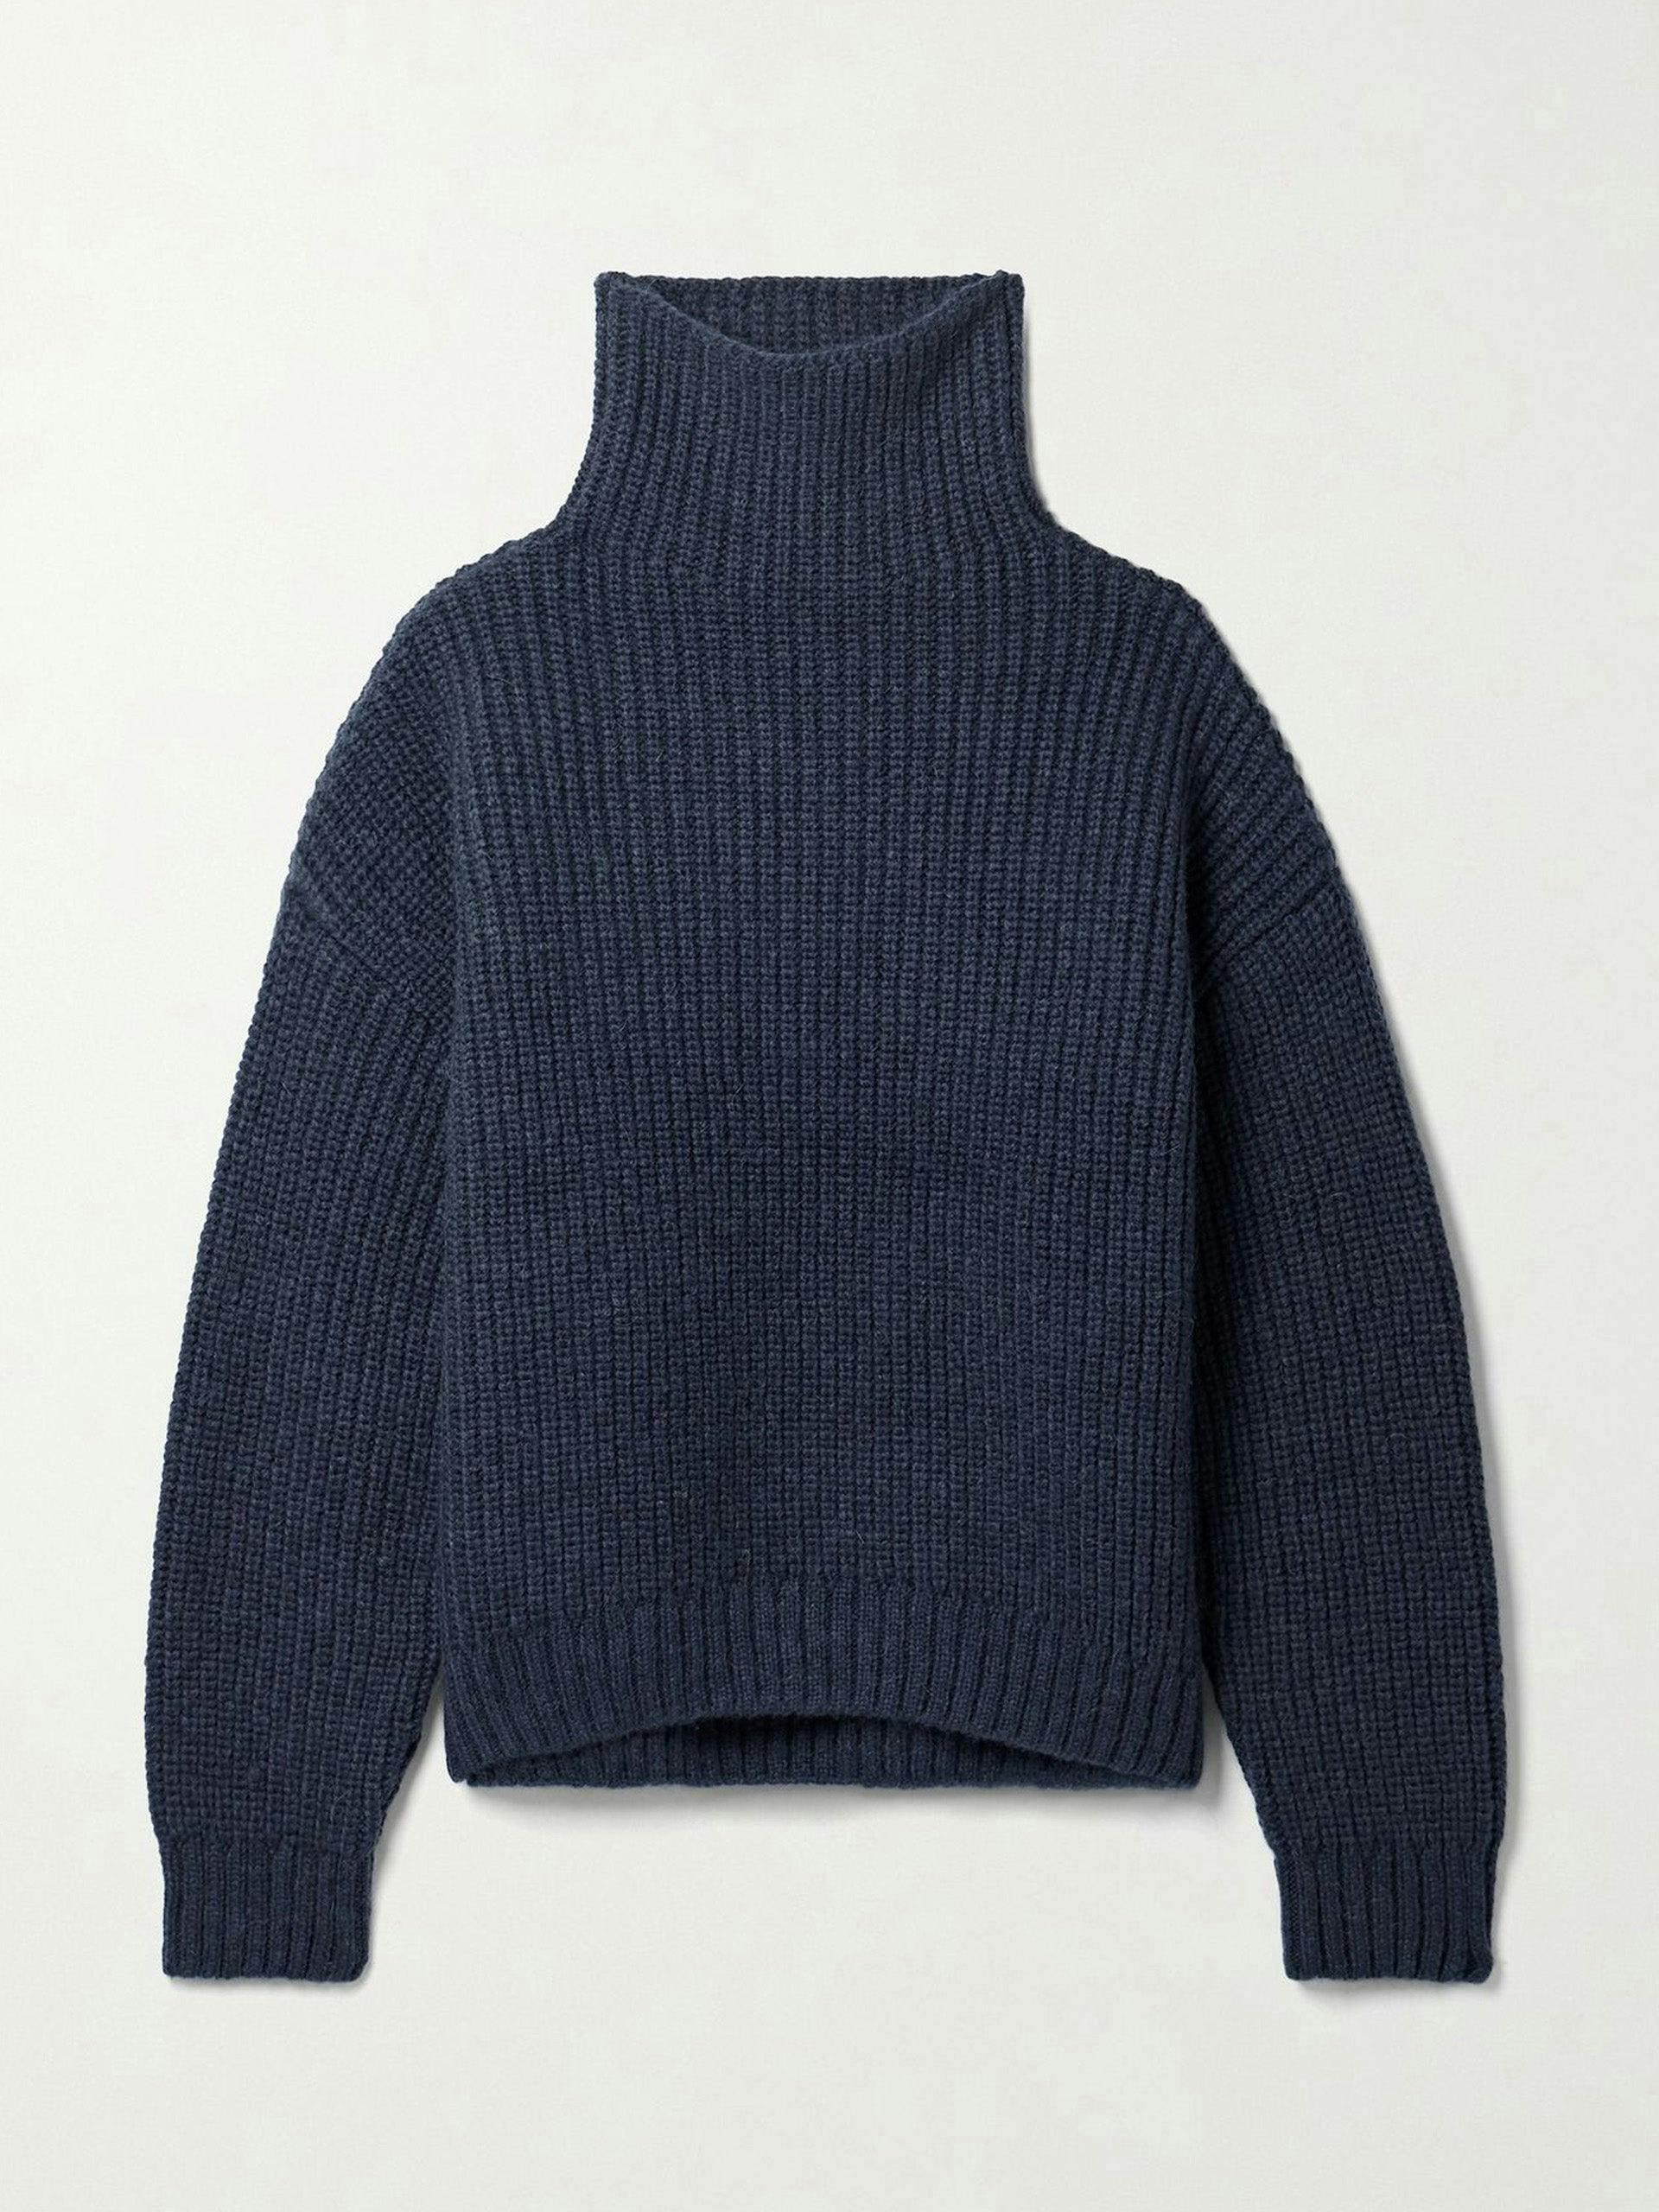 Sydney ribbed-knit turtleneck sweater